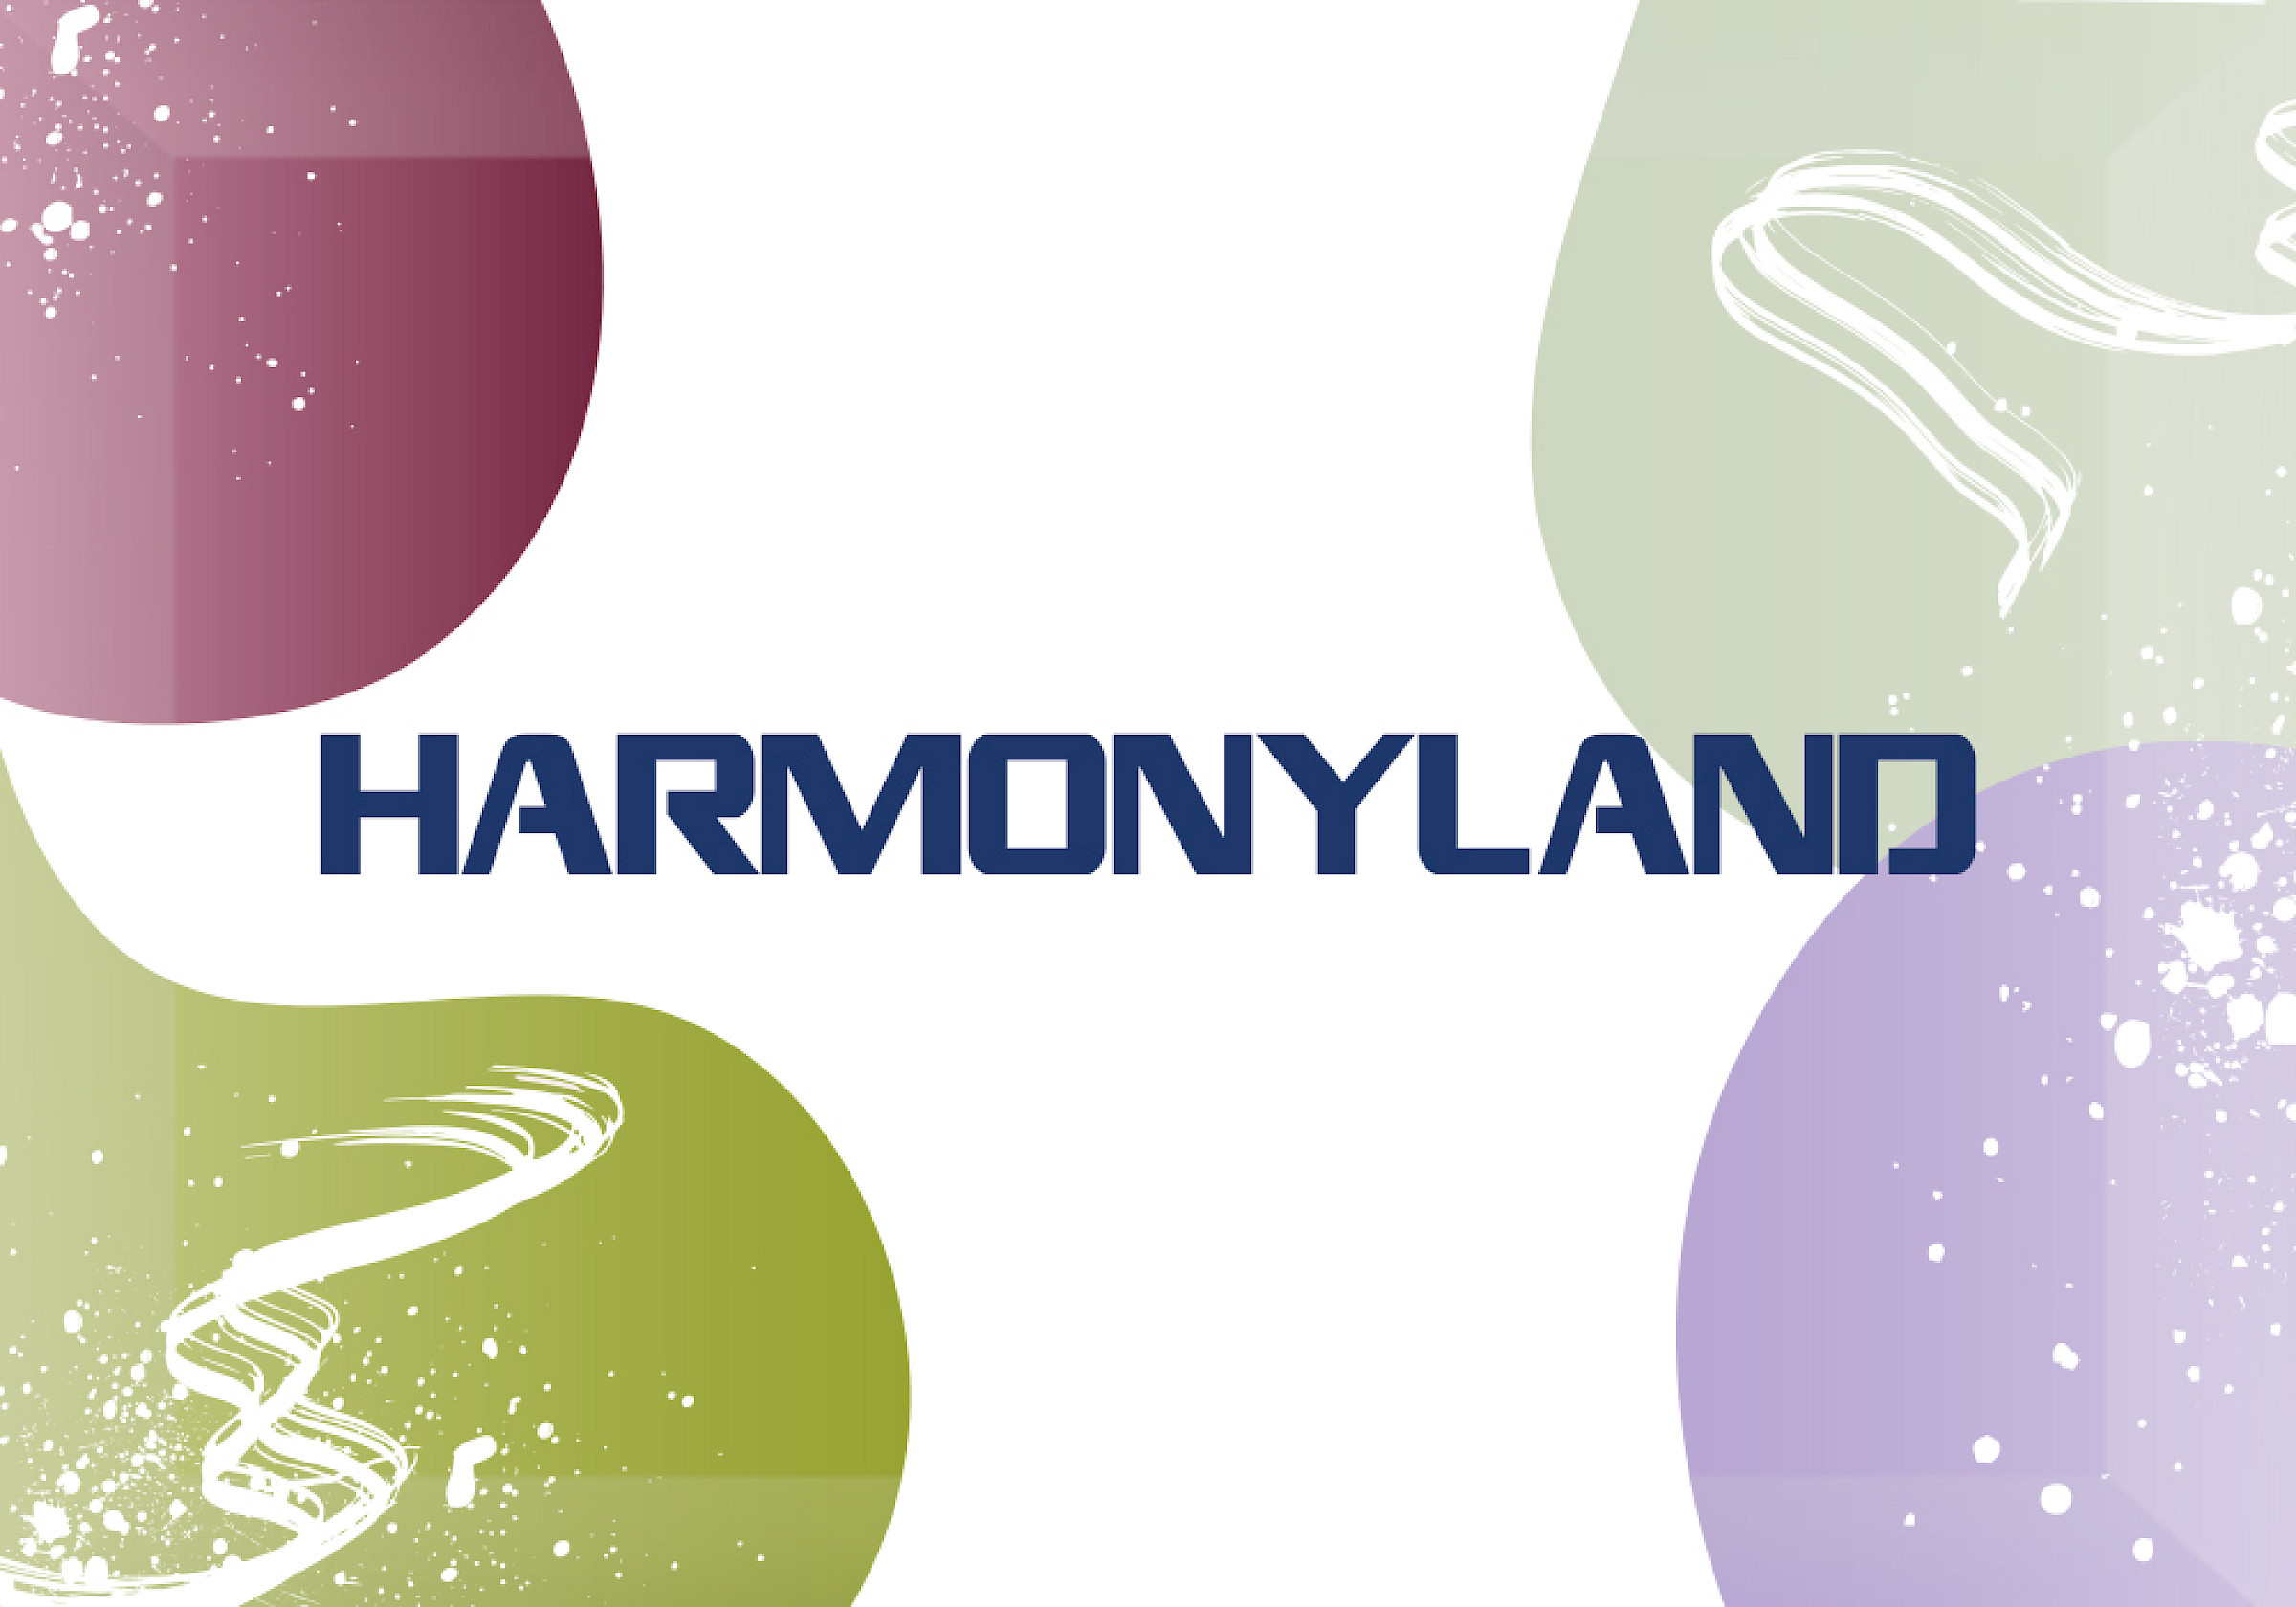 Harmonyland